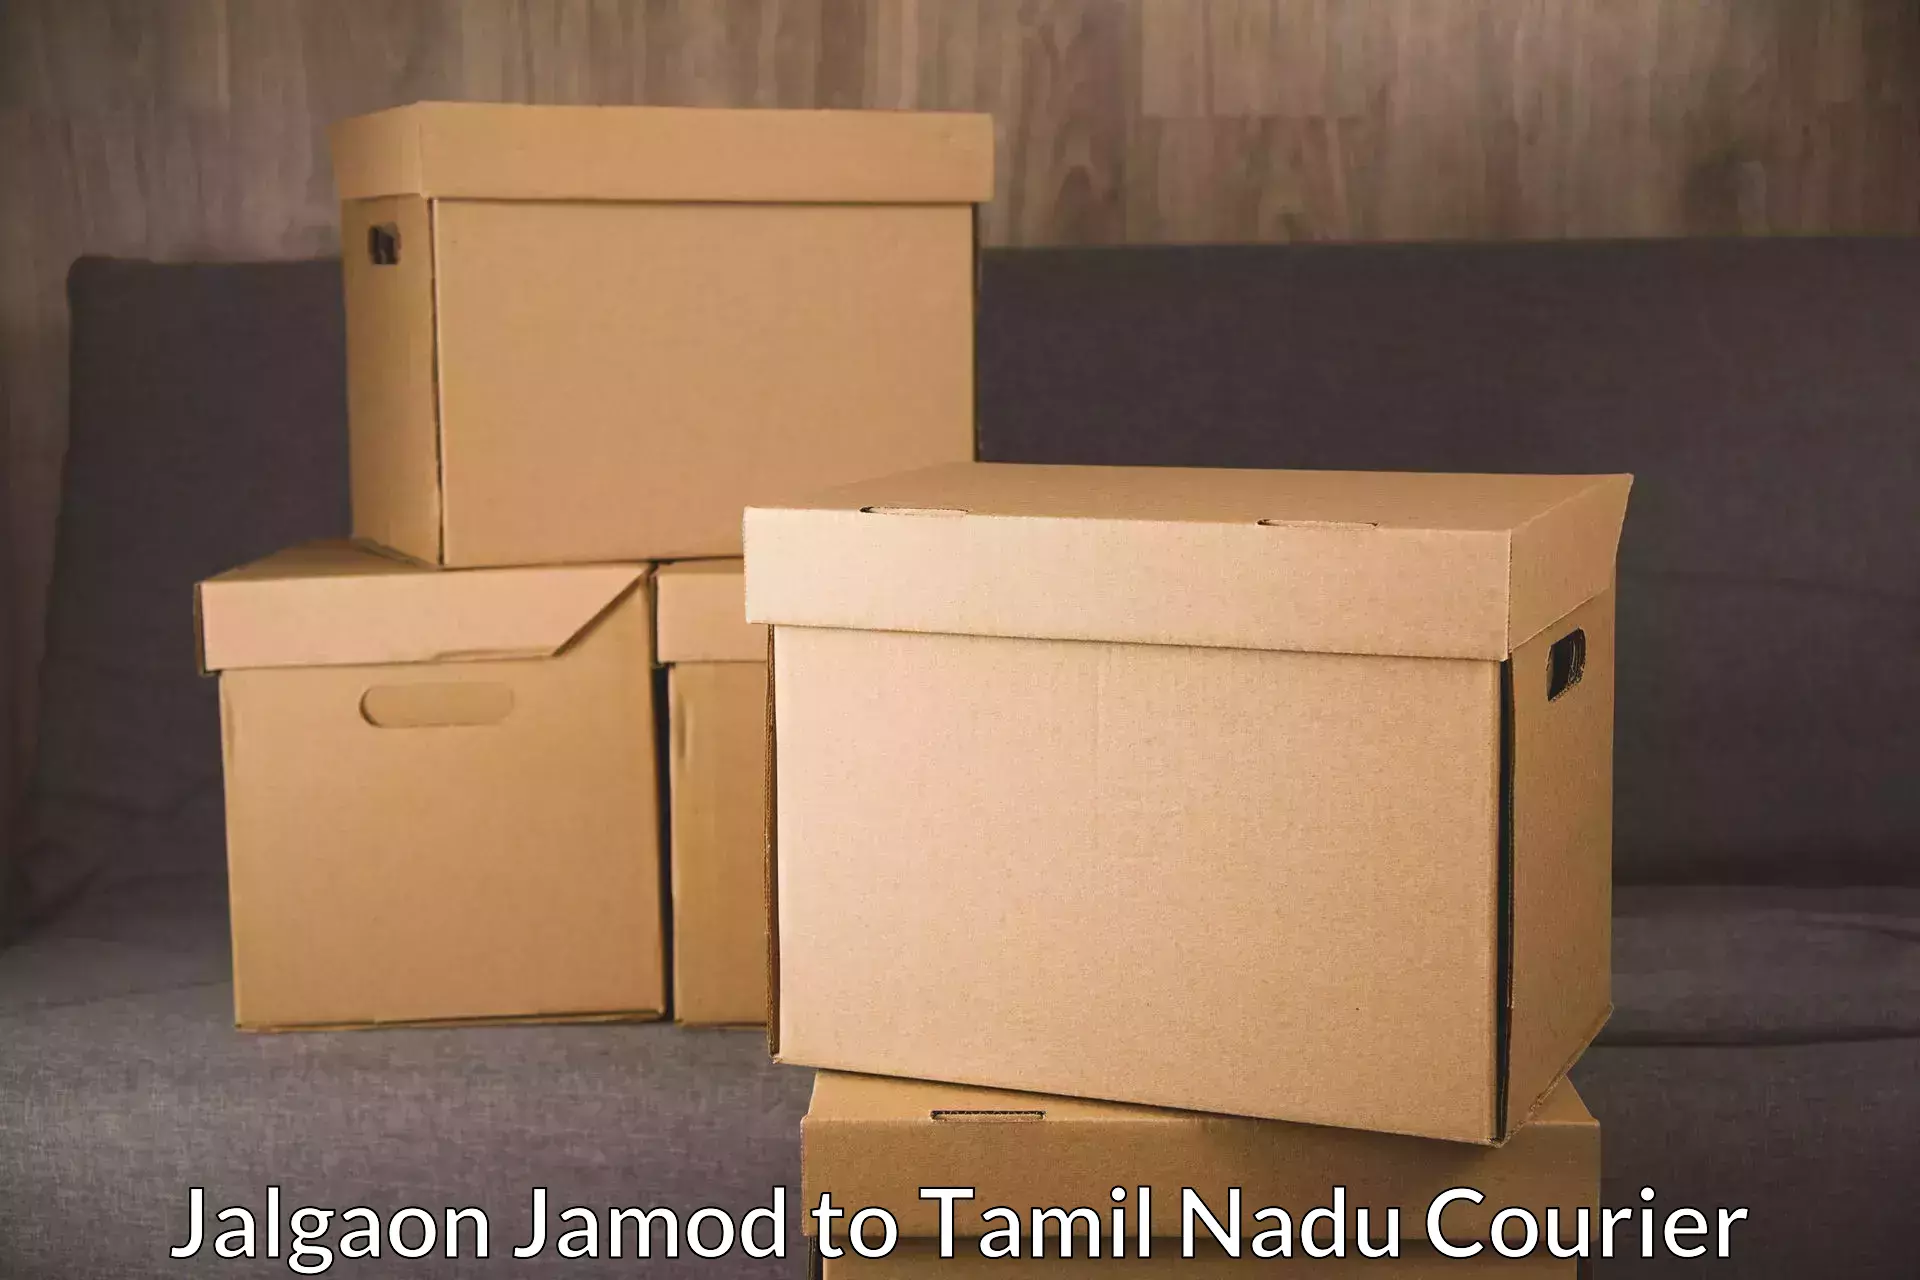 Express logistics providers Jalgaon Jamod to Tiruturaipundi